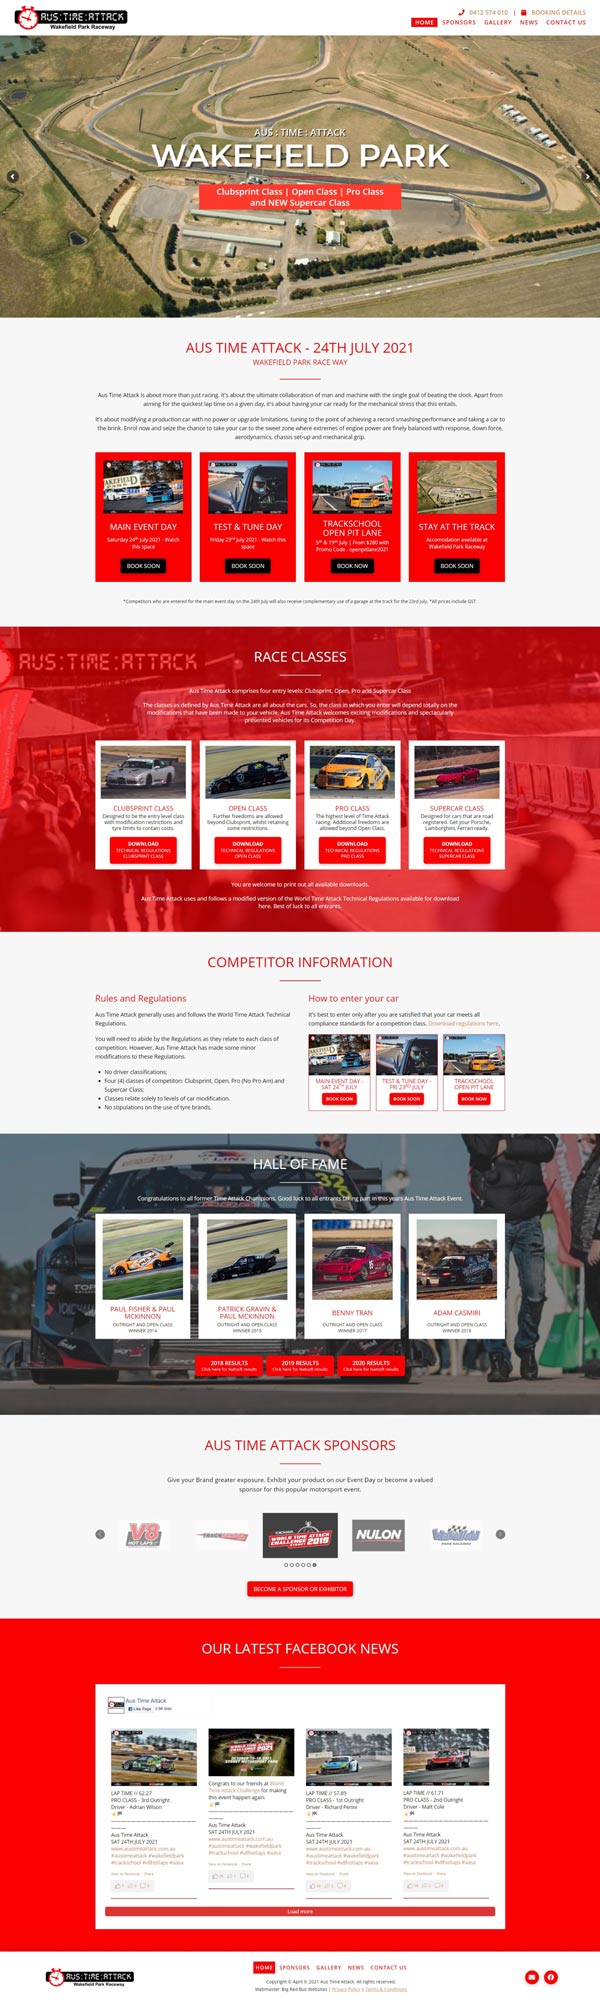 Aus Time Attack website designed by Big Red Bus Websites - ezample 1